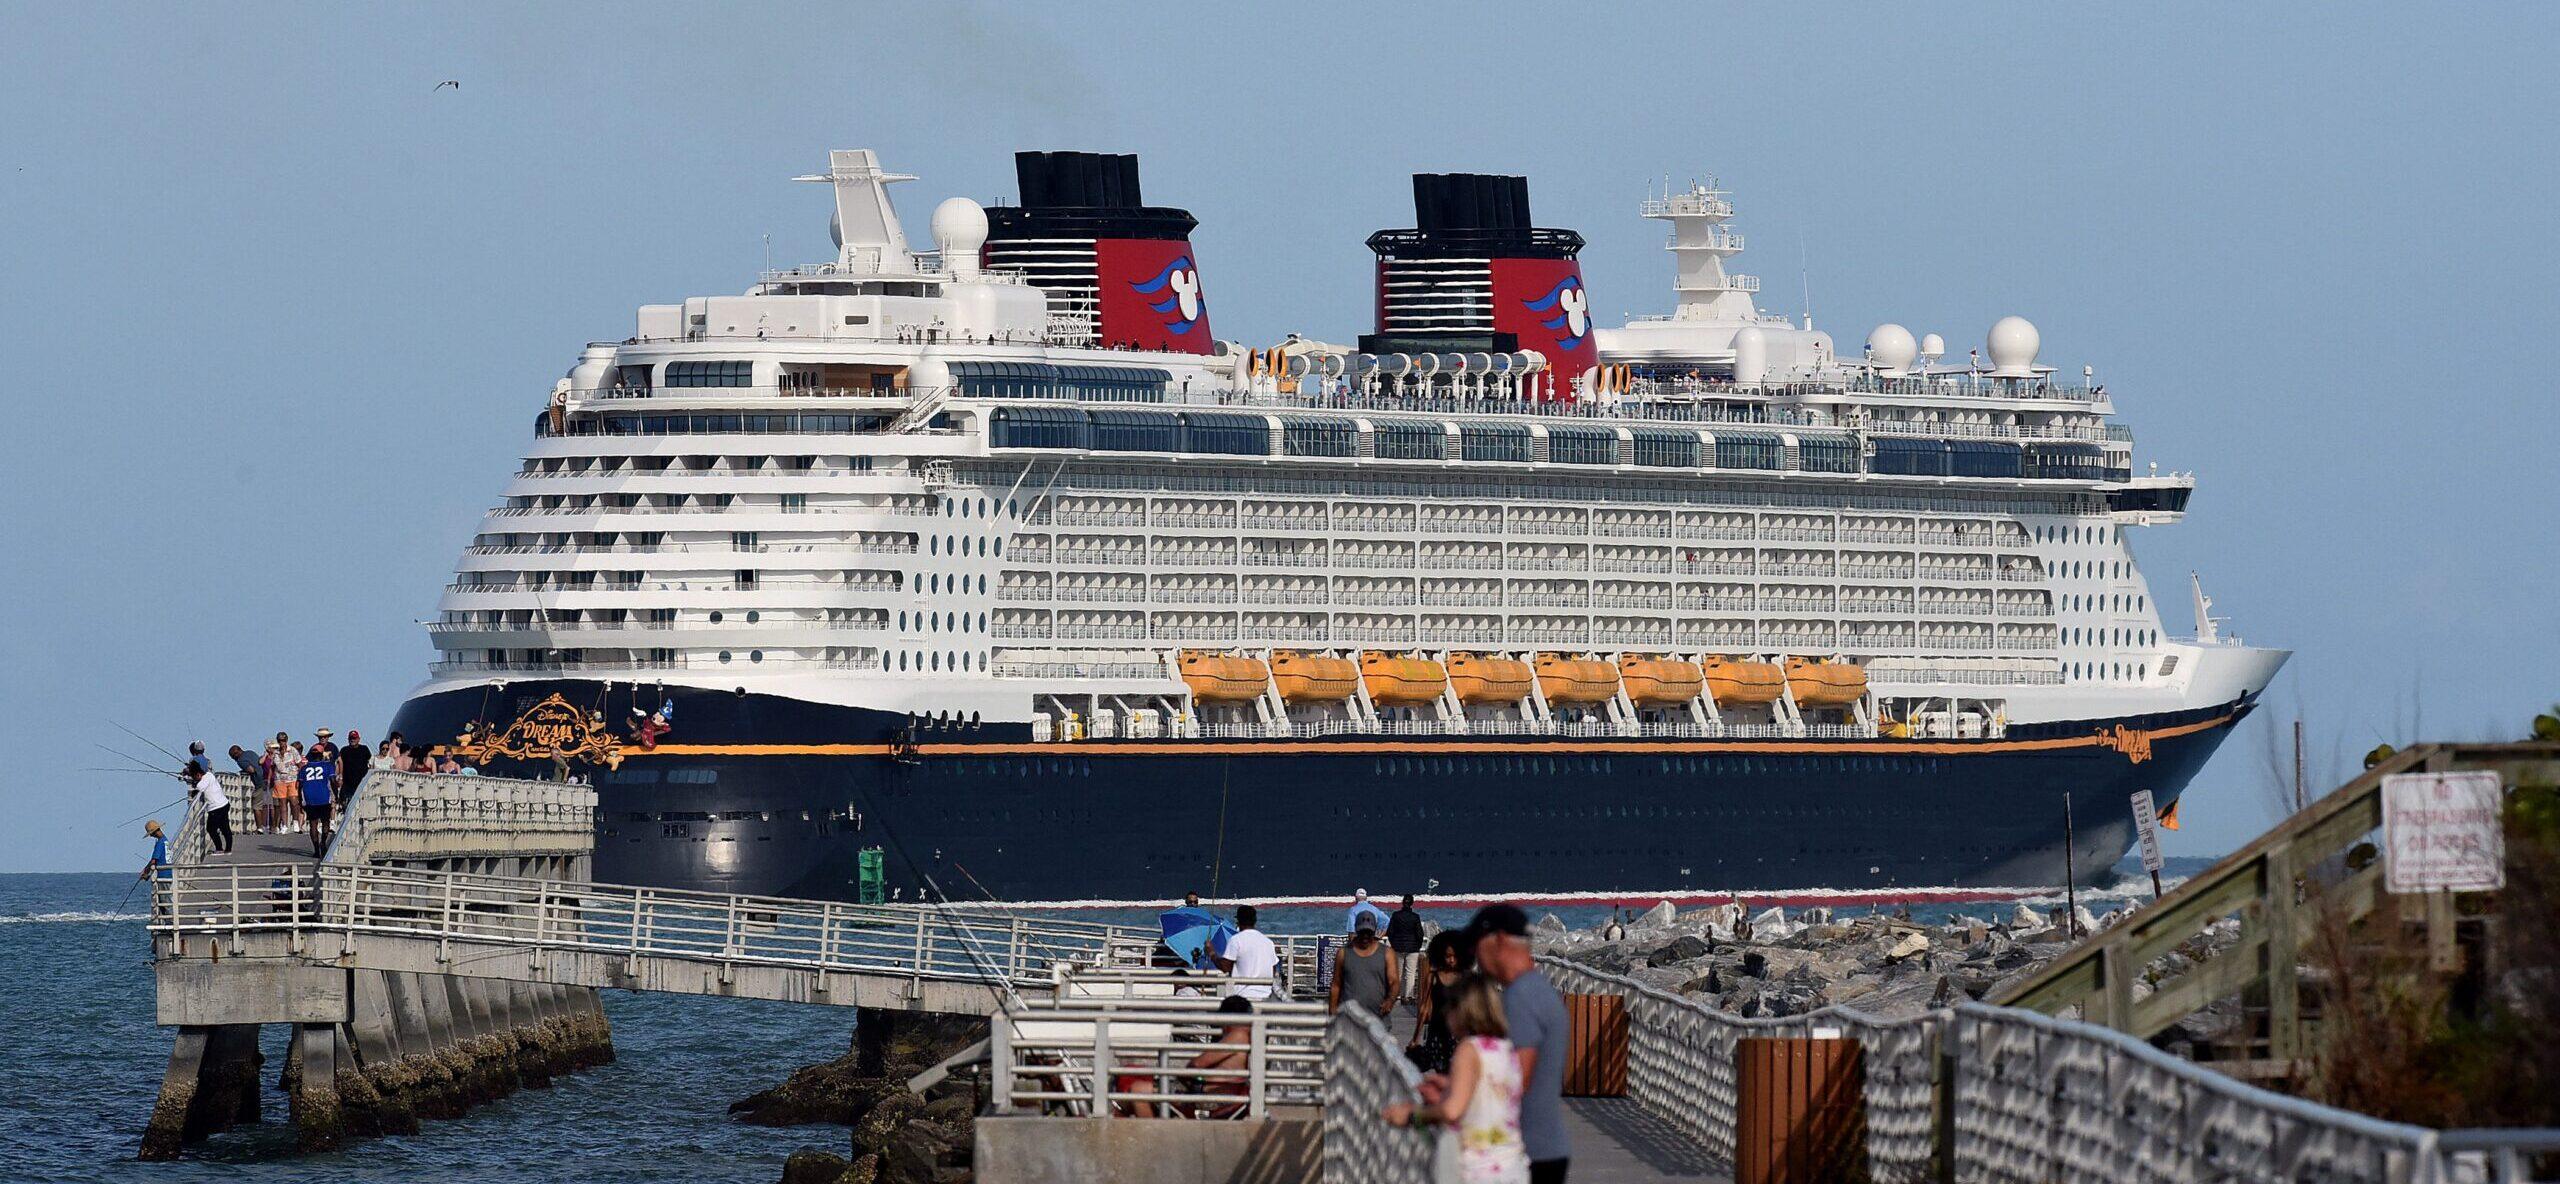 Disney Dream docked in Florida